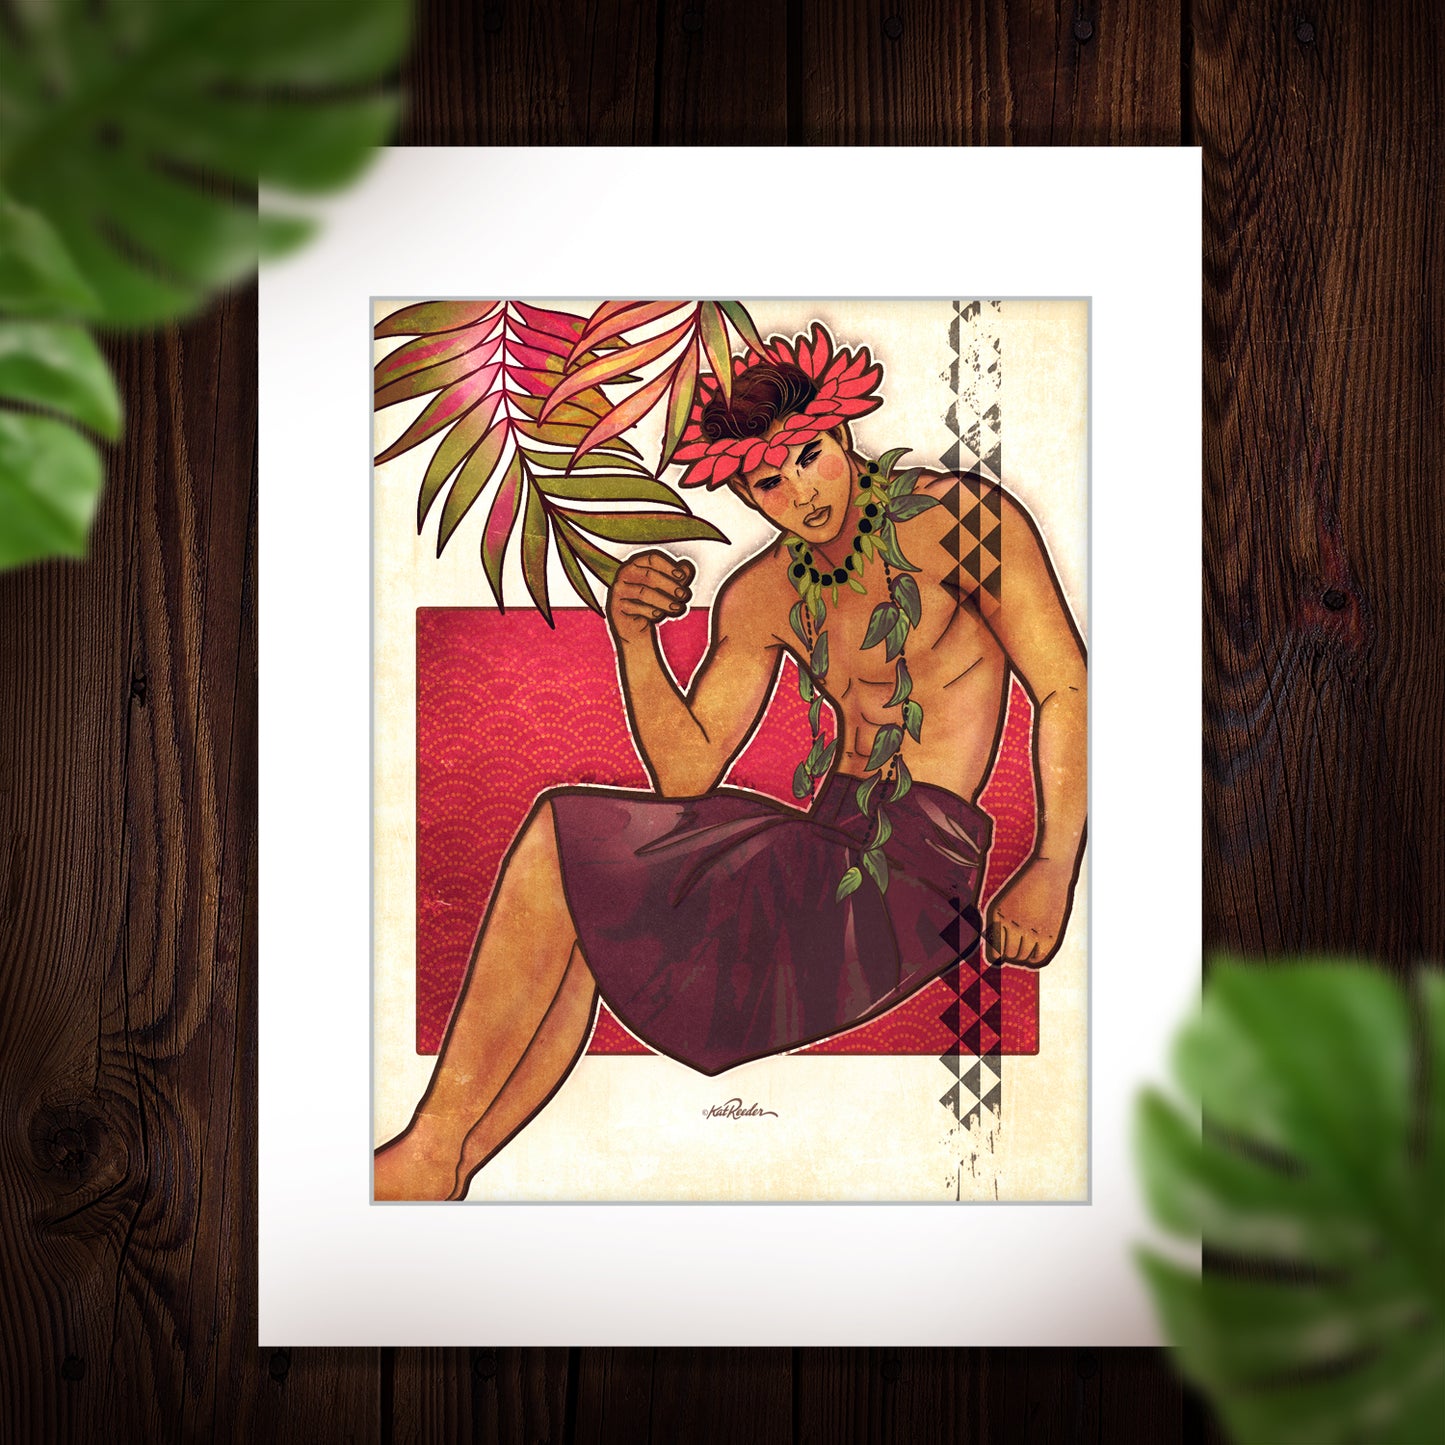 retro style minimalist illustration of a shirtless male hula dancer